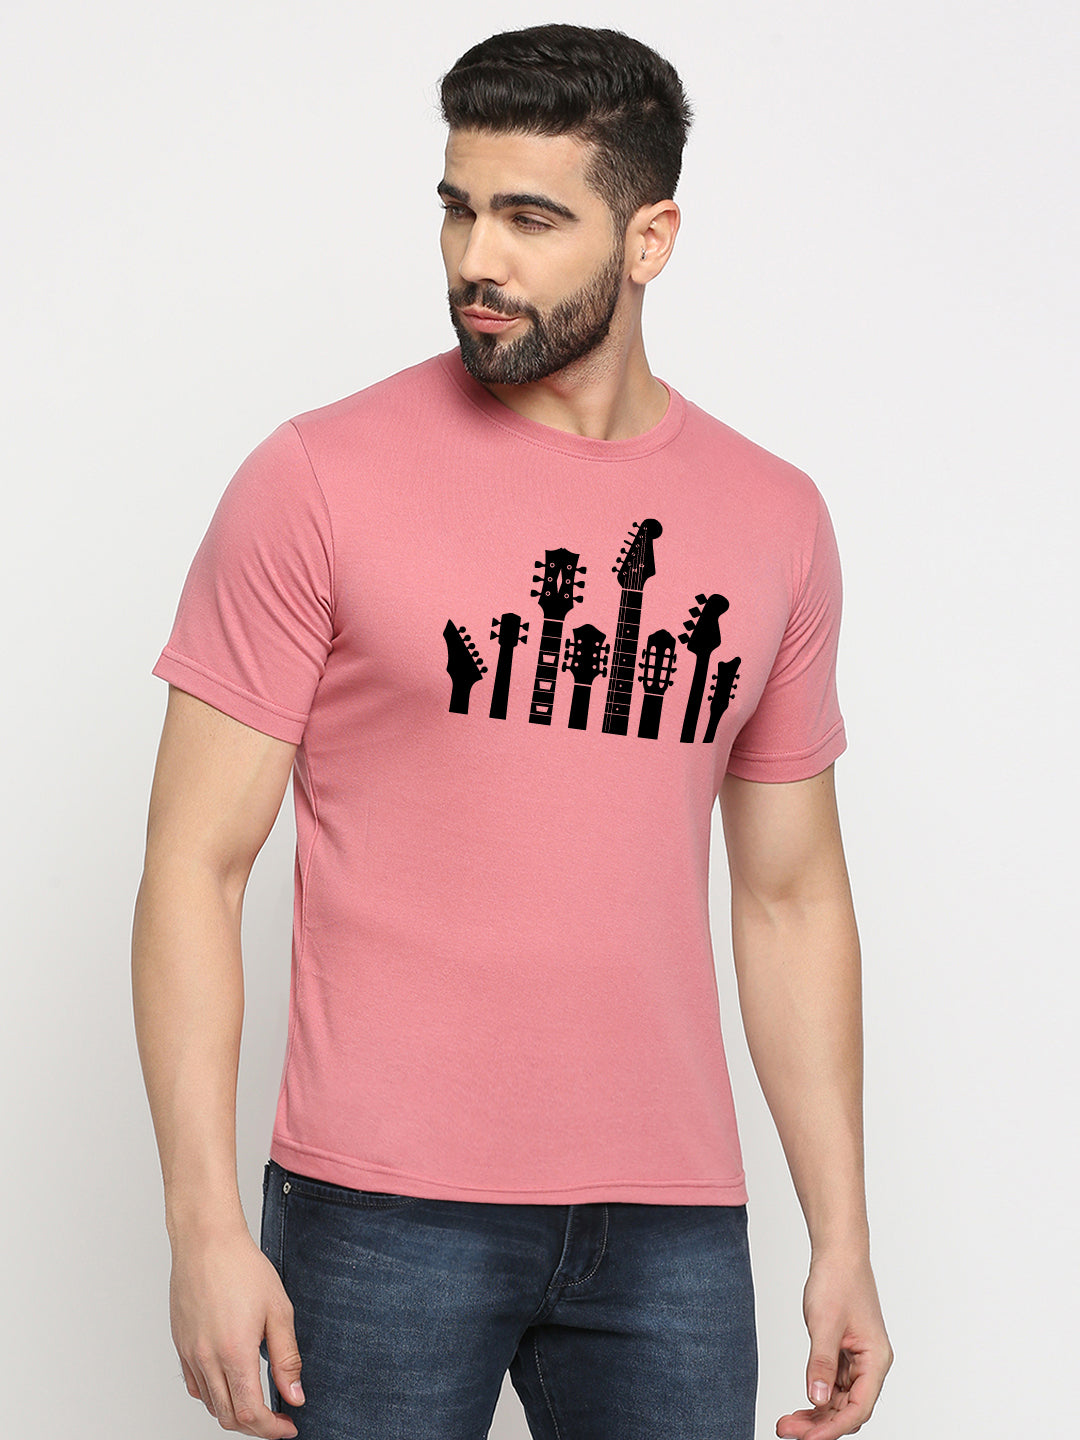 Guitar Headstocks T-Shirt